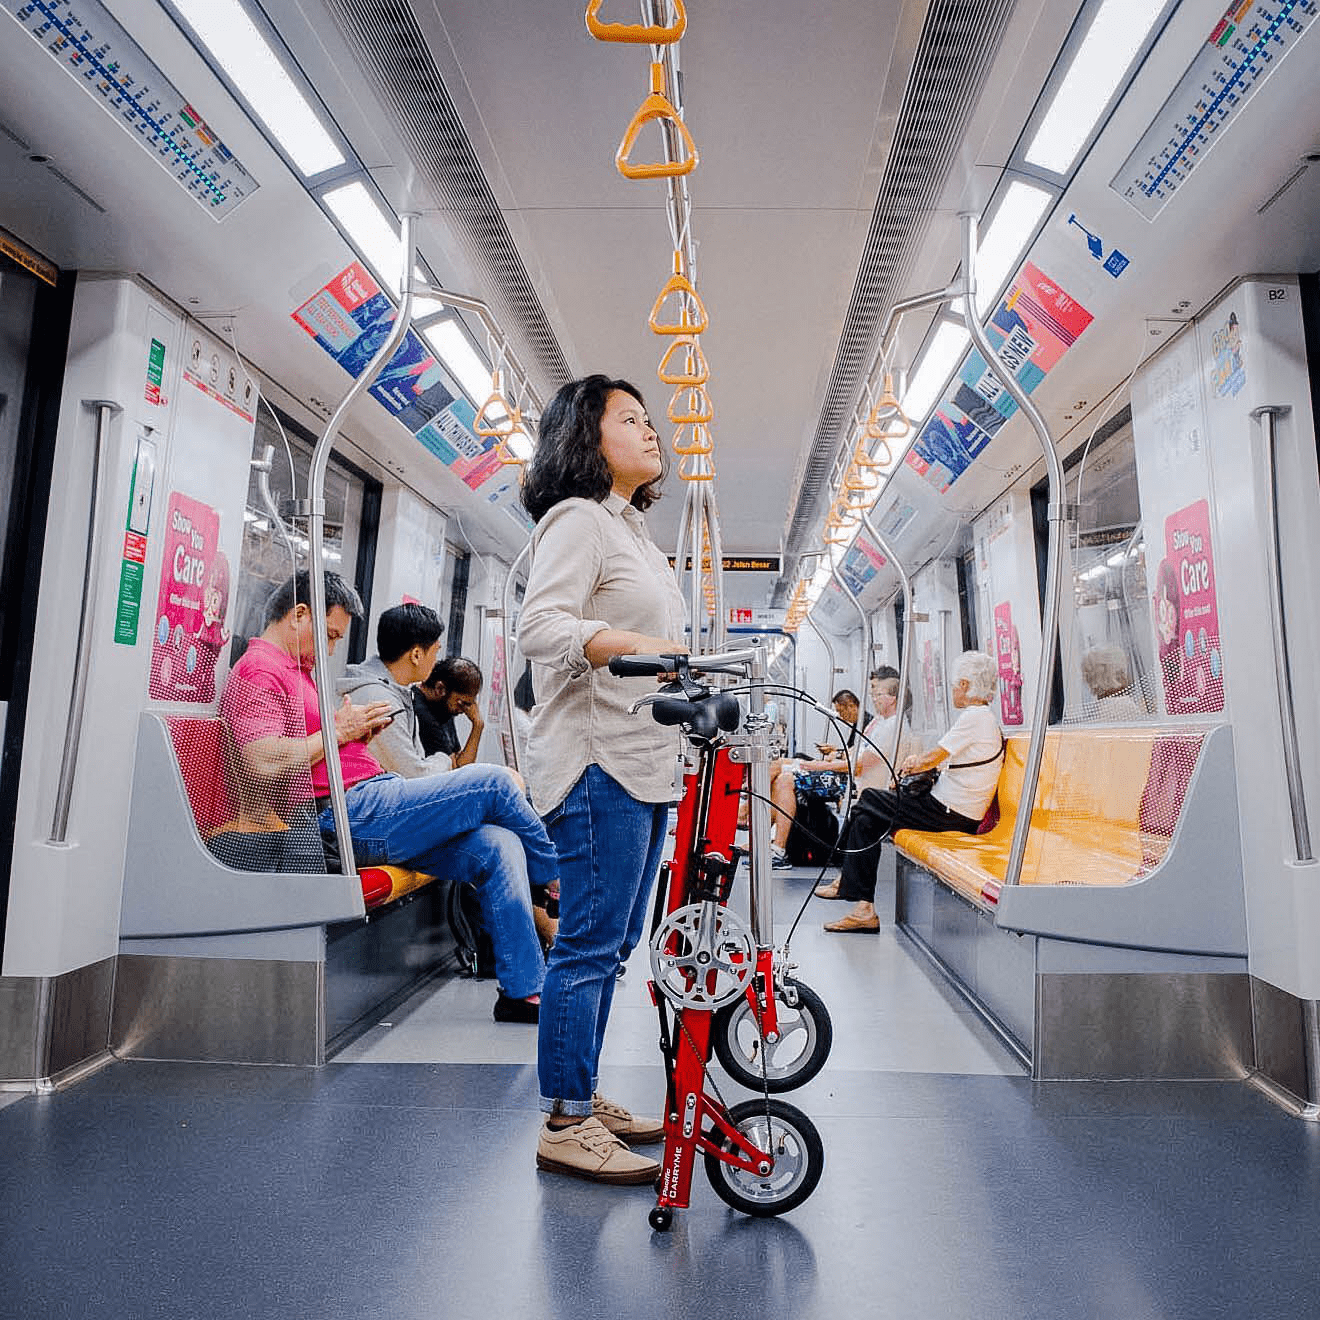 MRT Rules - Foldable bike